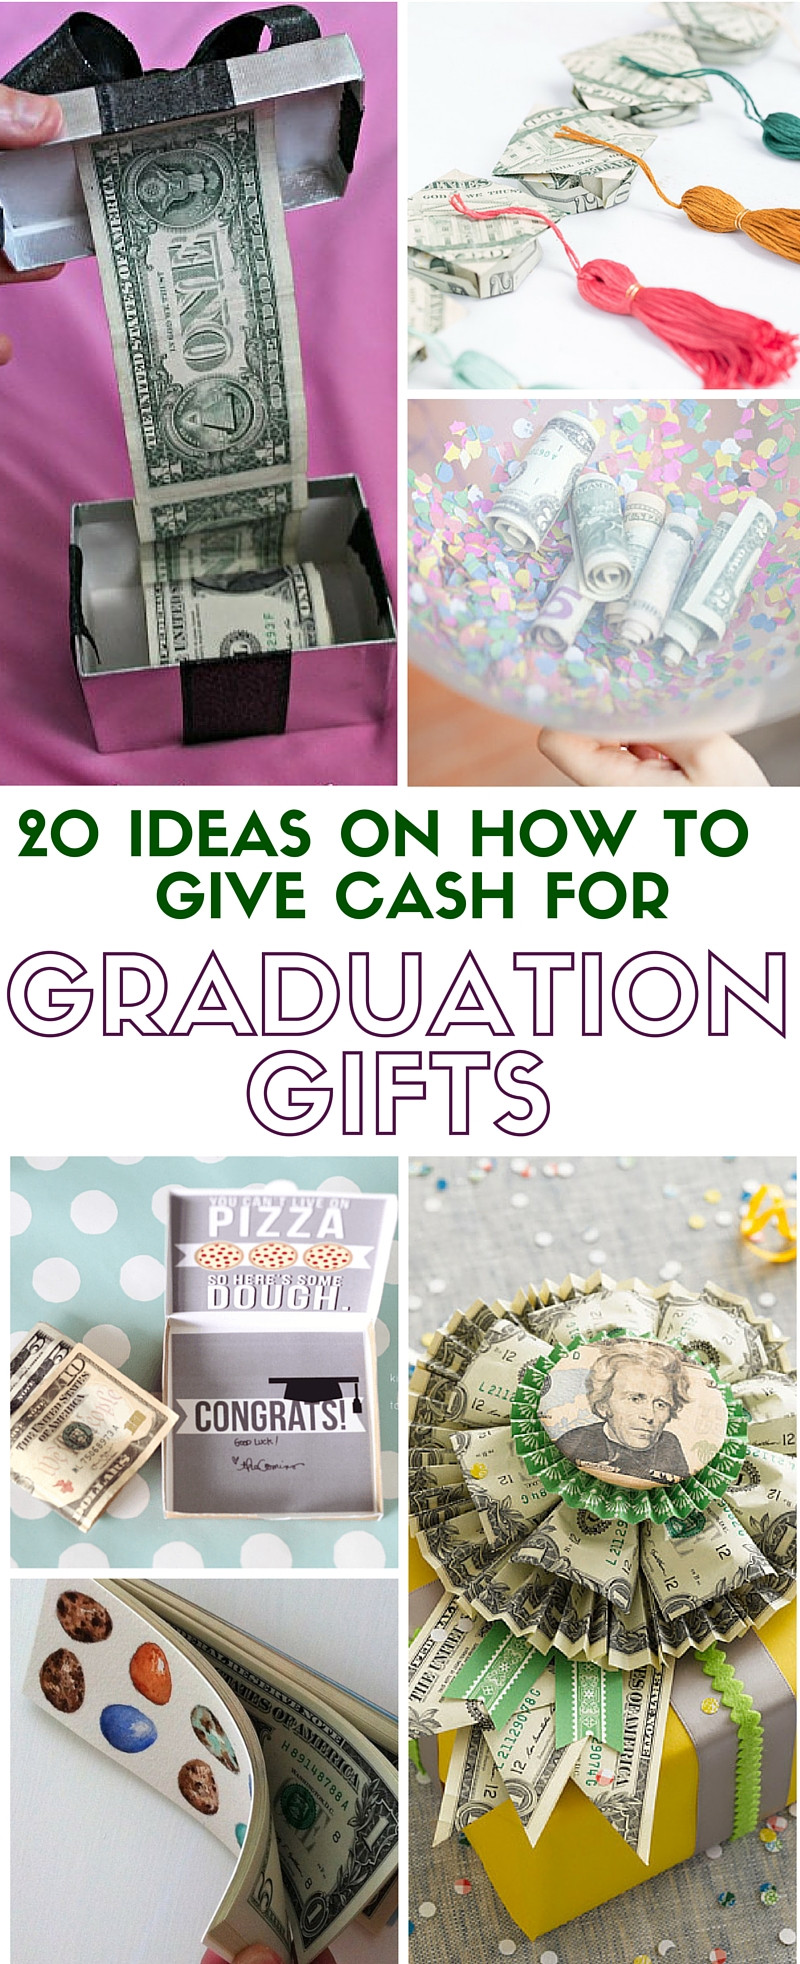 Cute Graduation Gift Ideas
 31 Back To School Teacher Gift Ideas The Crafty Blog Stalker